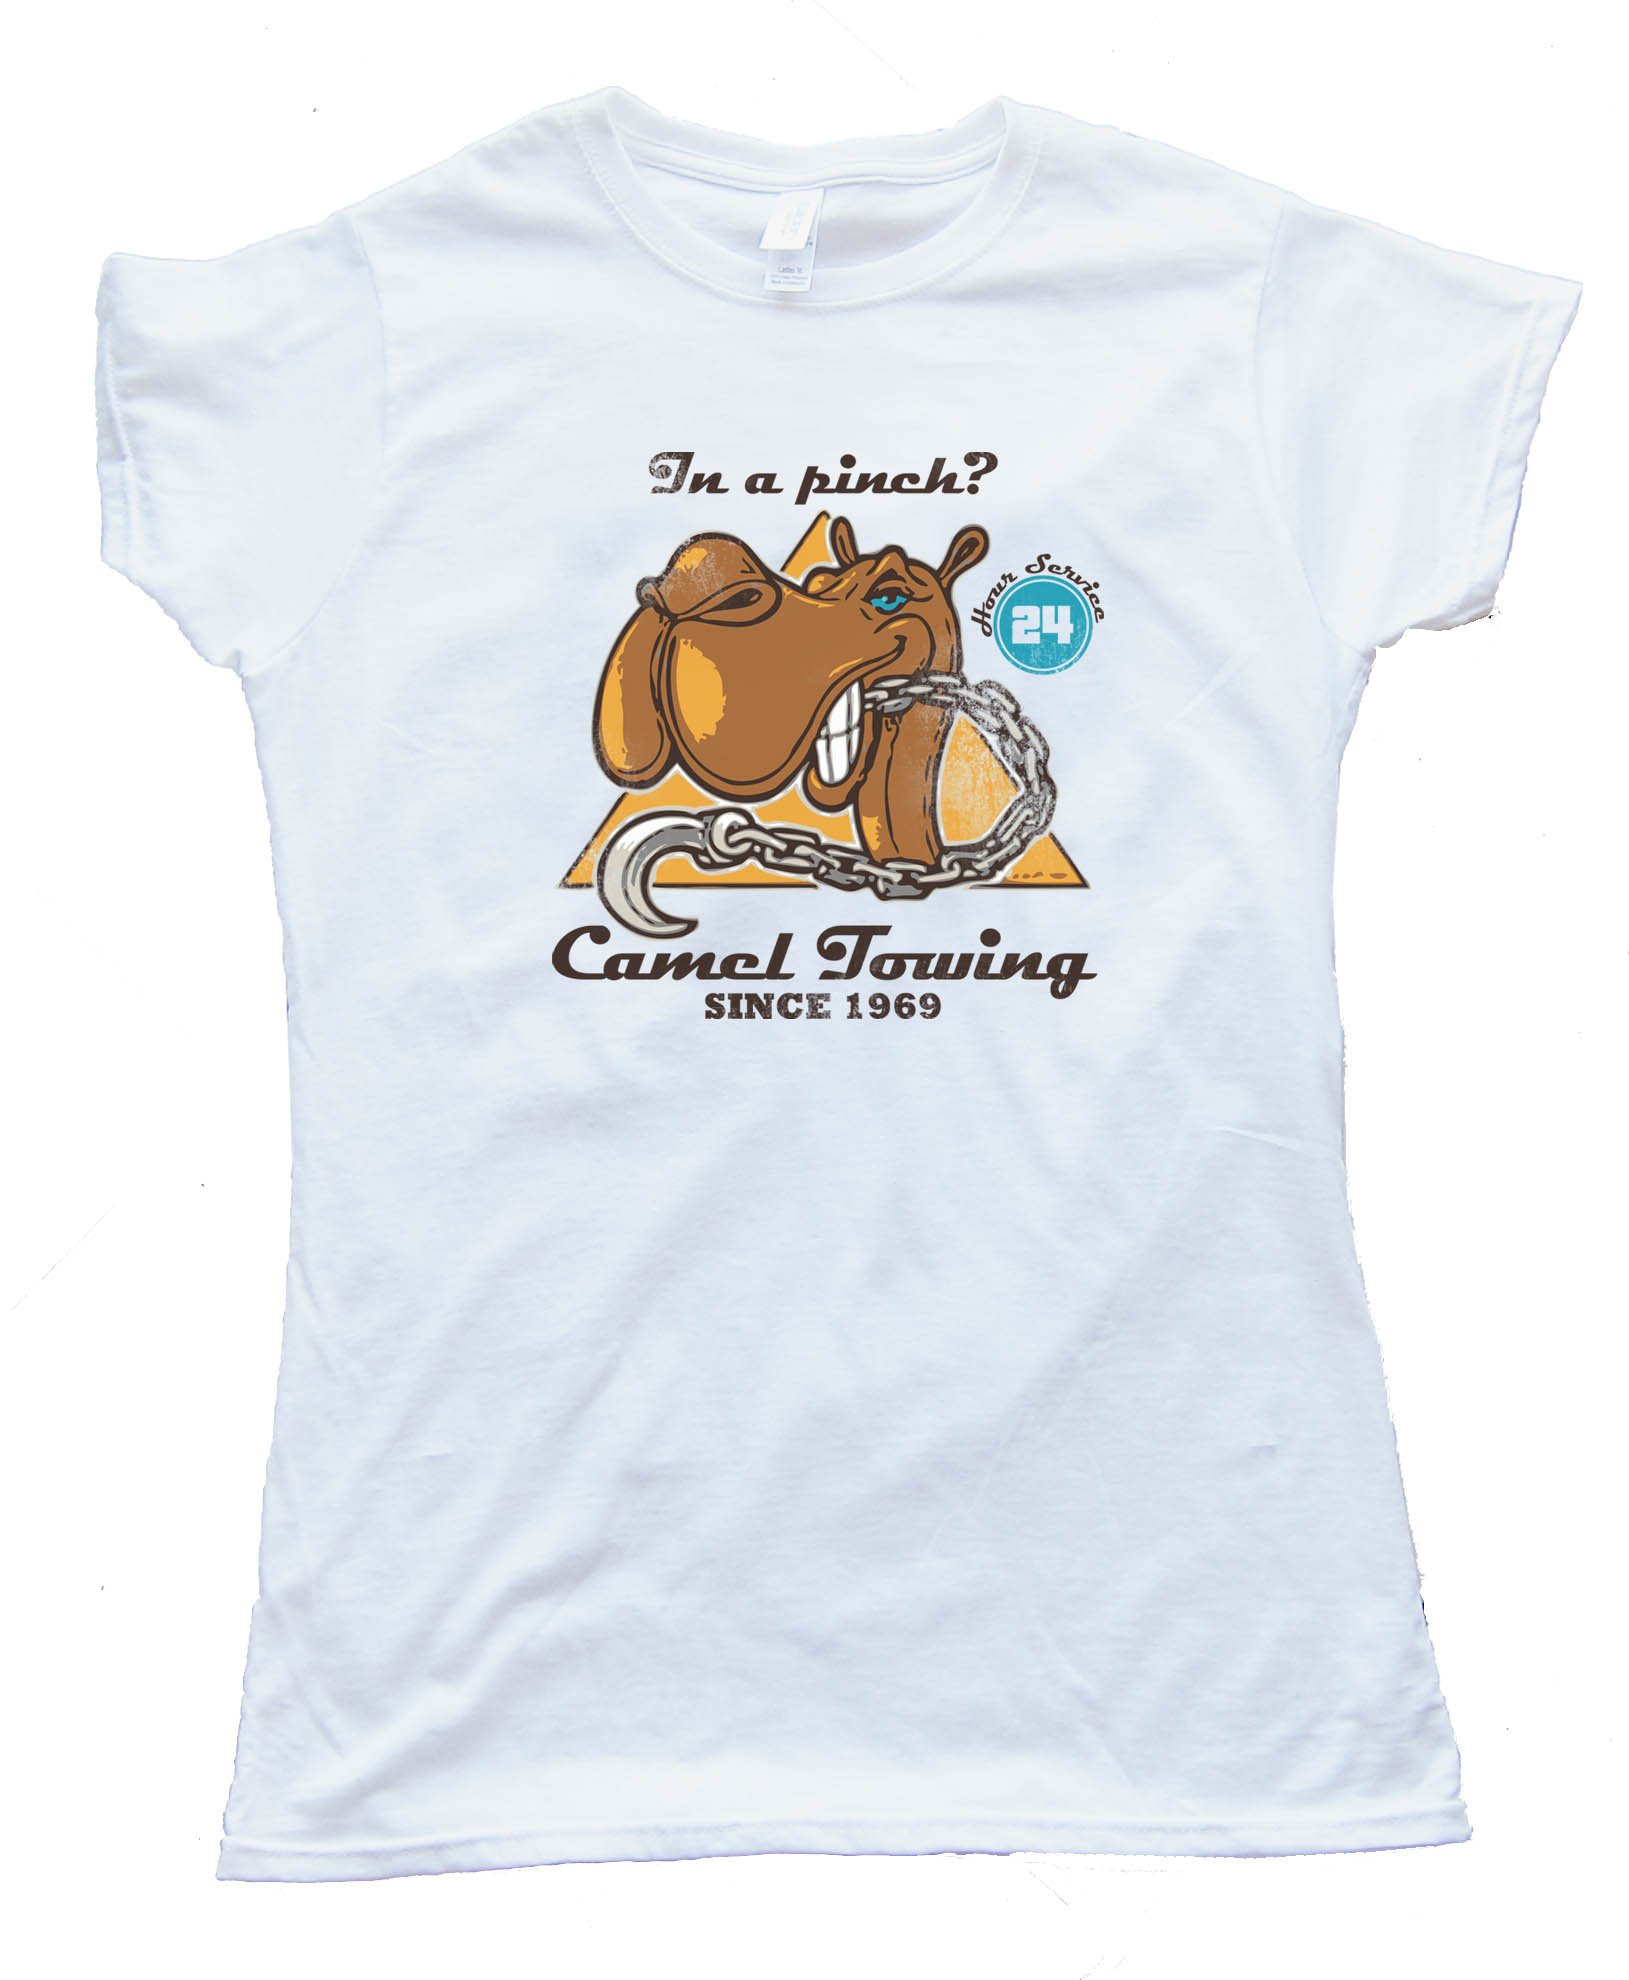 Womens Camel Towing Since 1969 - Camel Toe - Tee Shirt